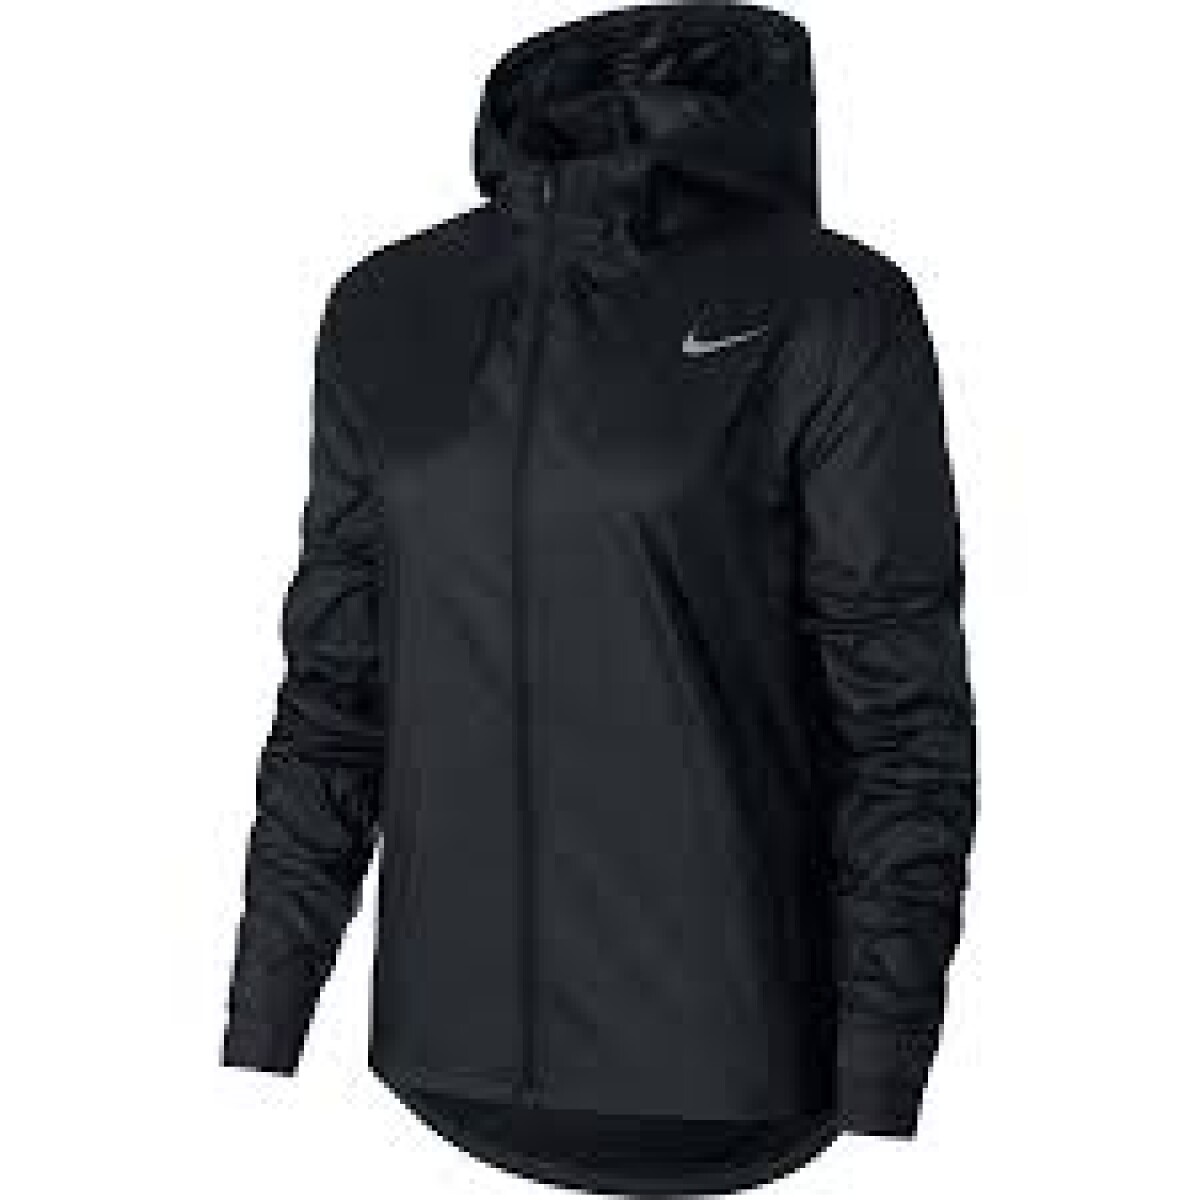 Campera Nike Running Dama Essential Jacket Black/(REFLECTIVE SILV) - Color Único 